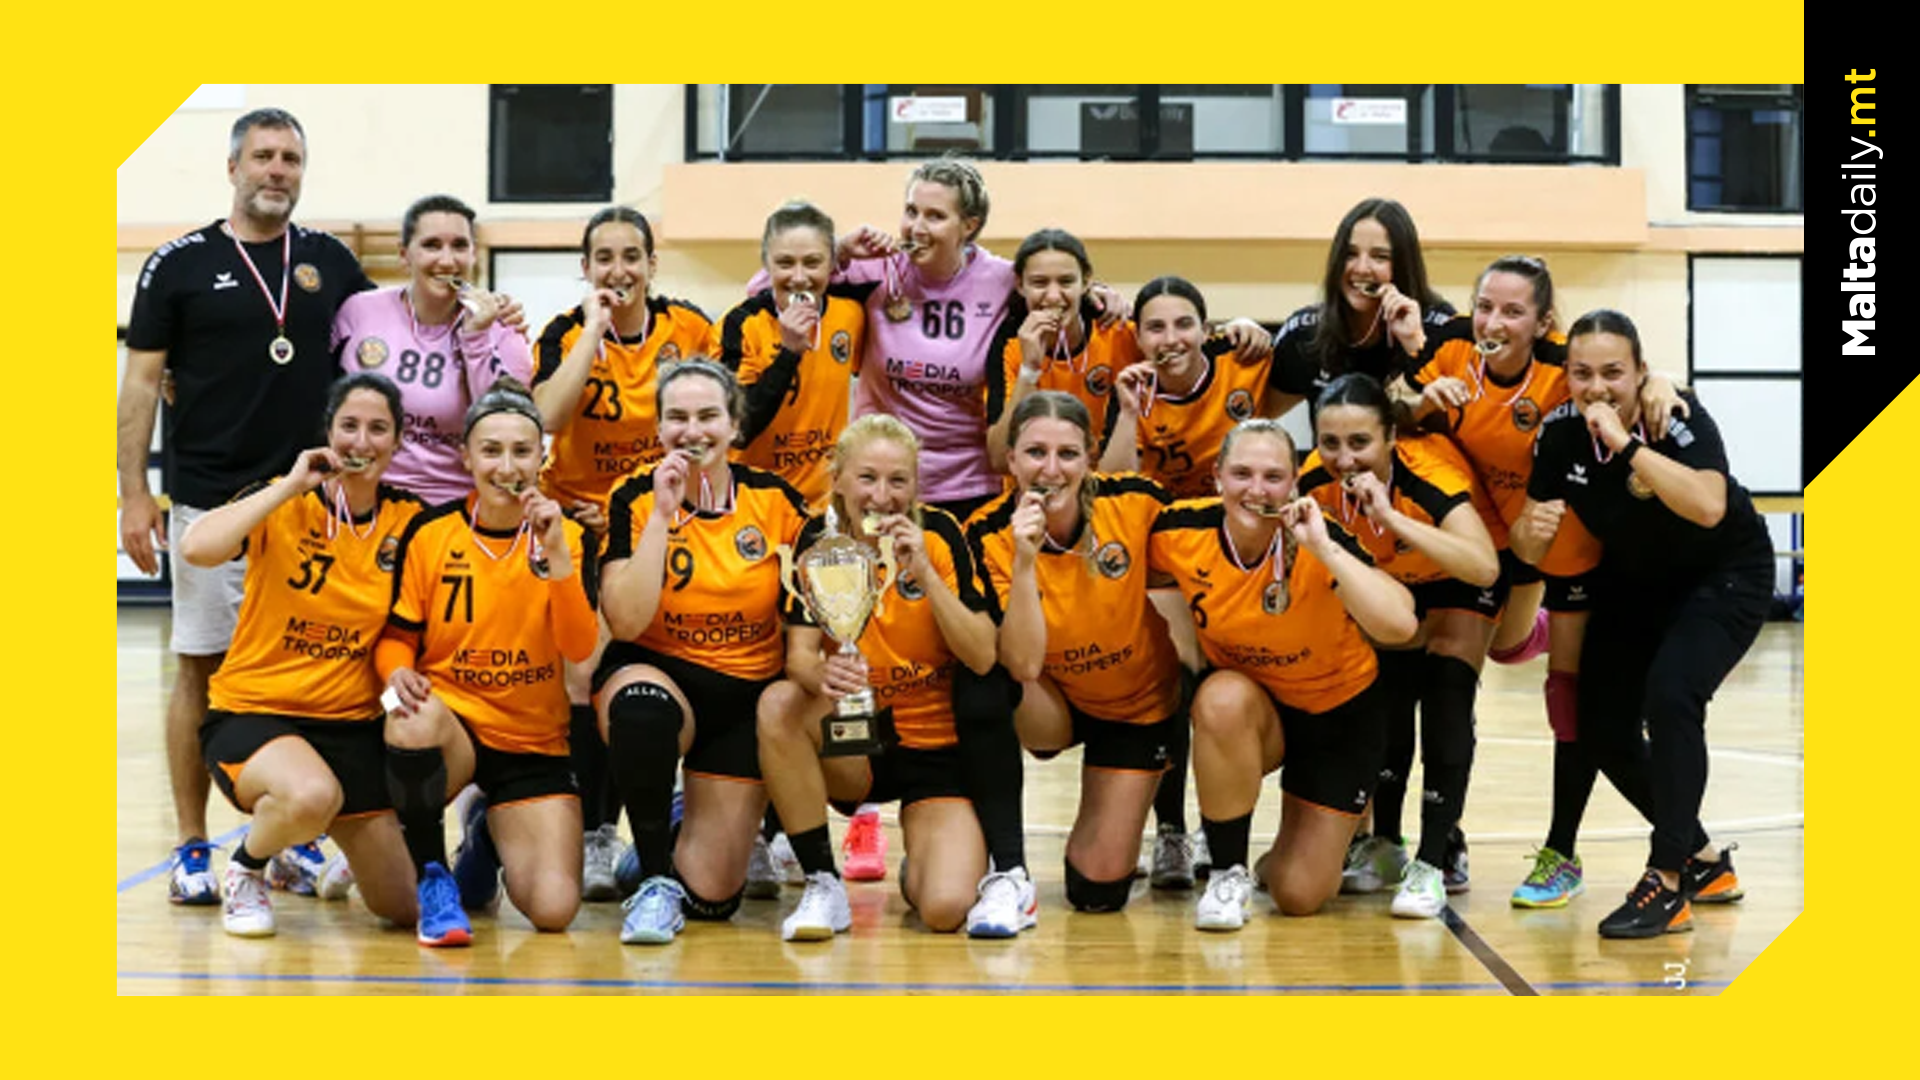 Maltese Handball Club Raising Funds To Compete Internationally!